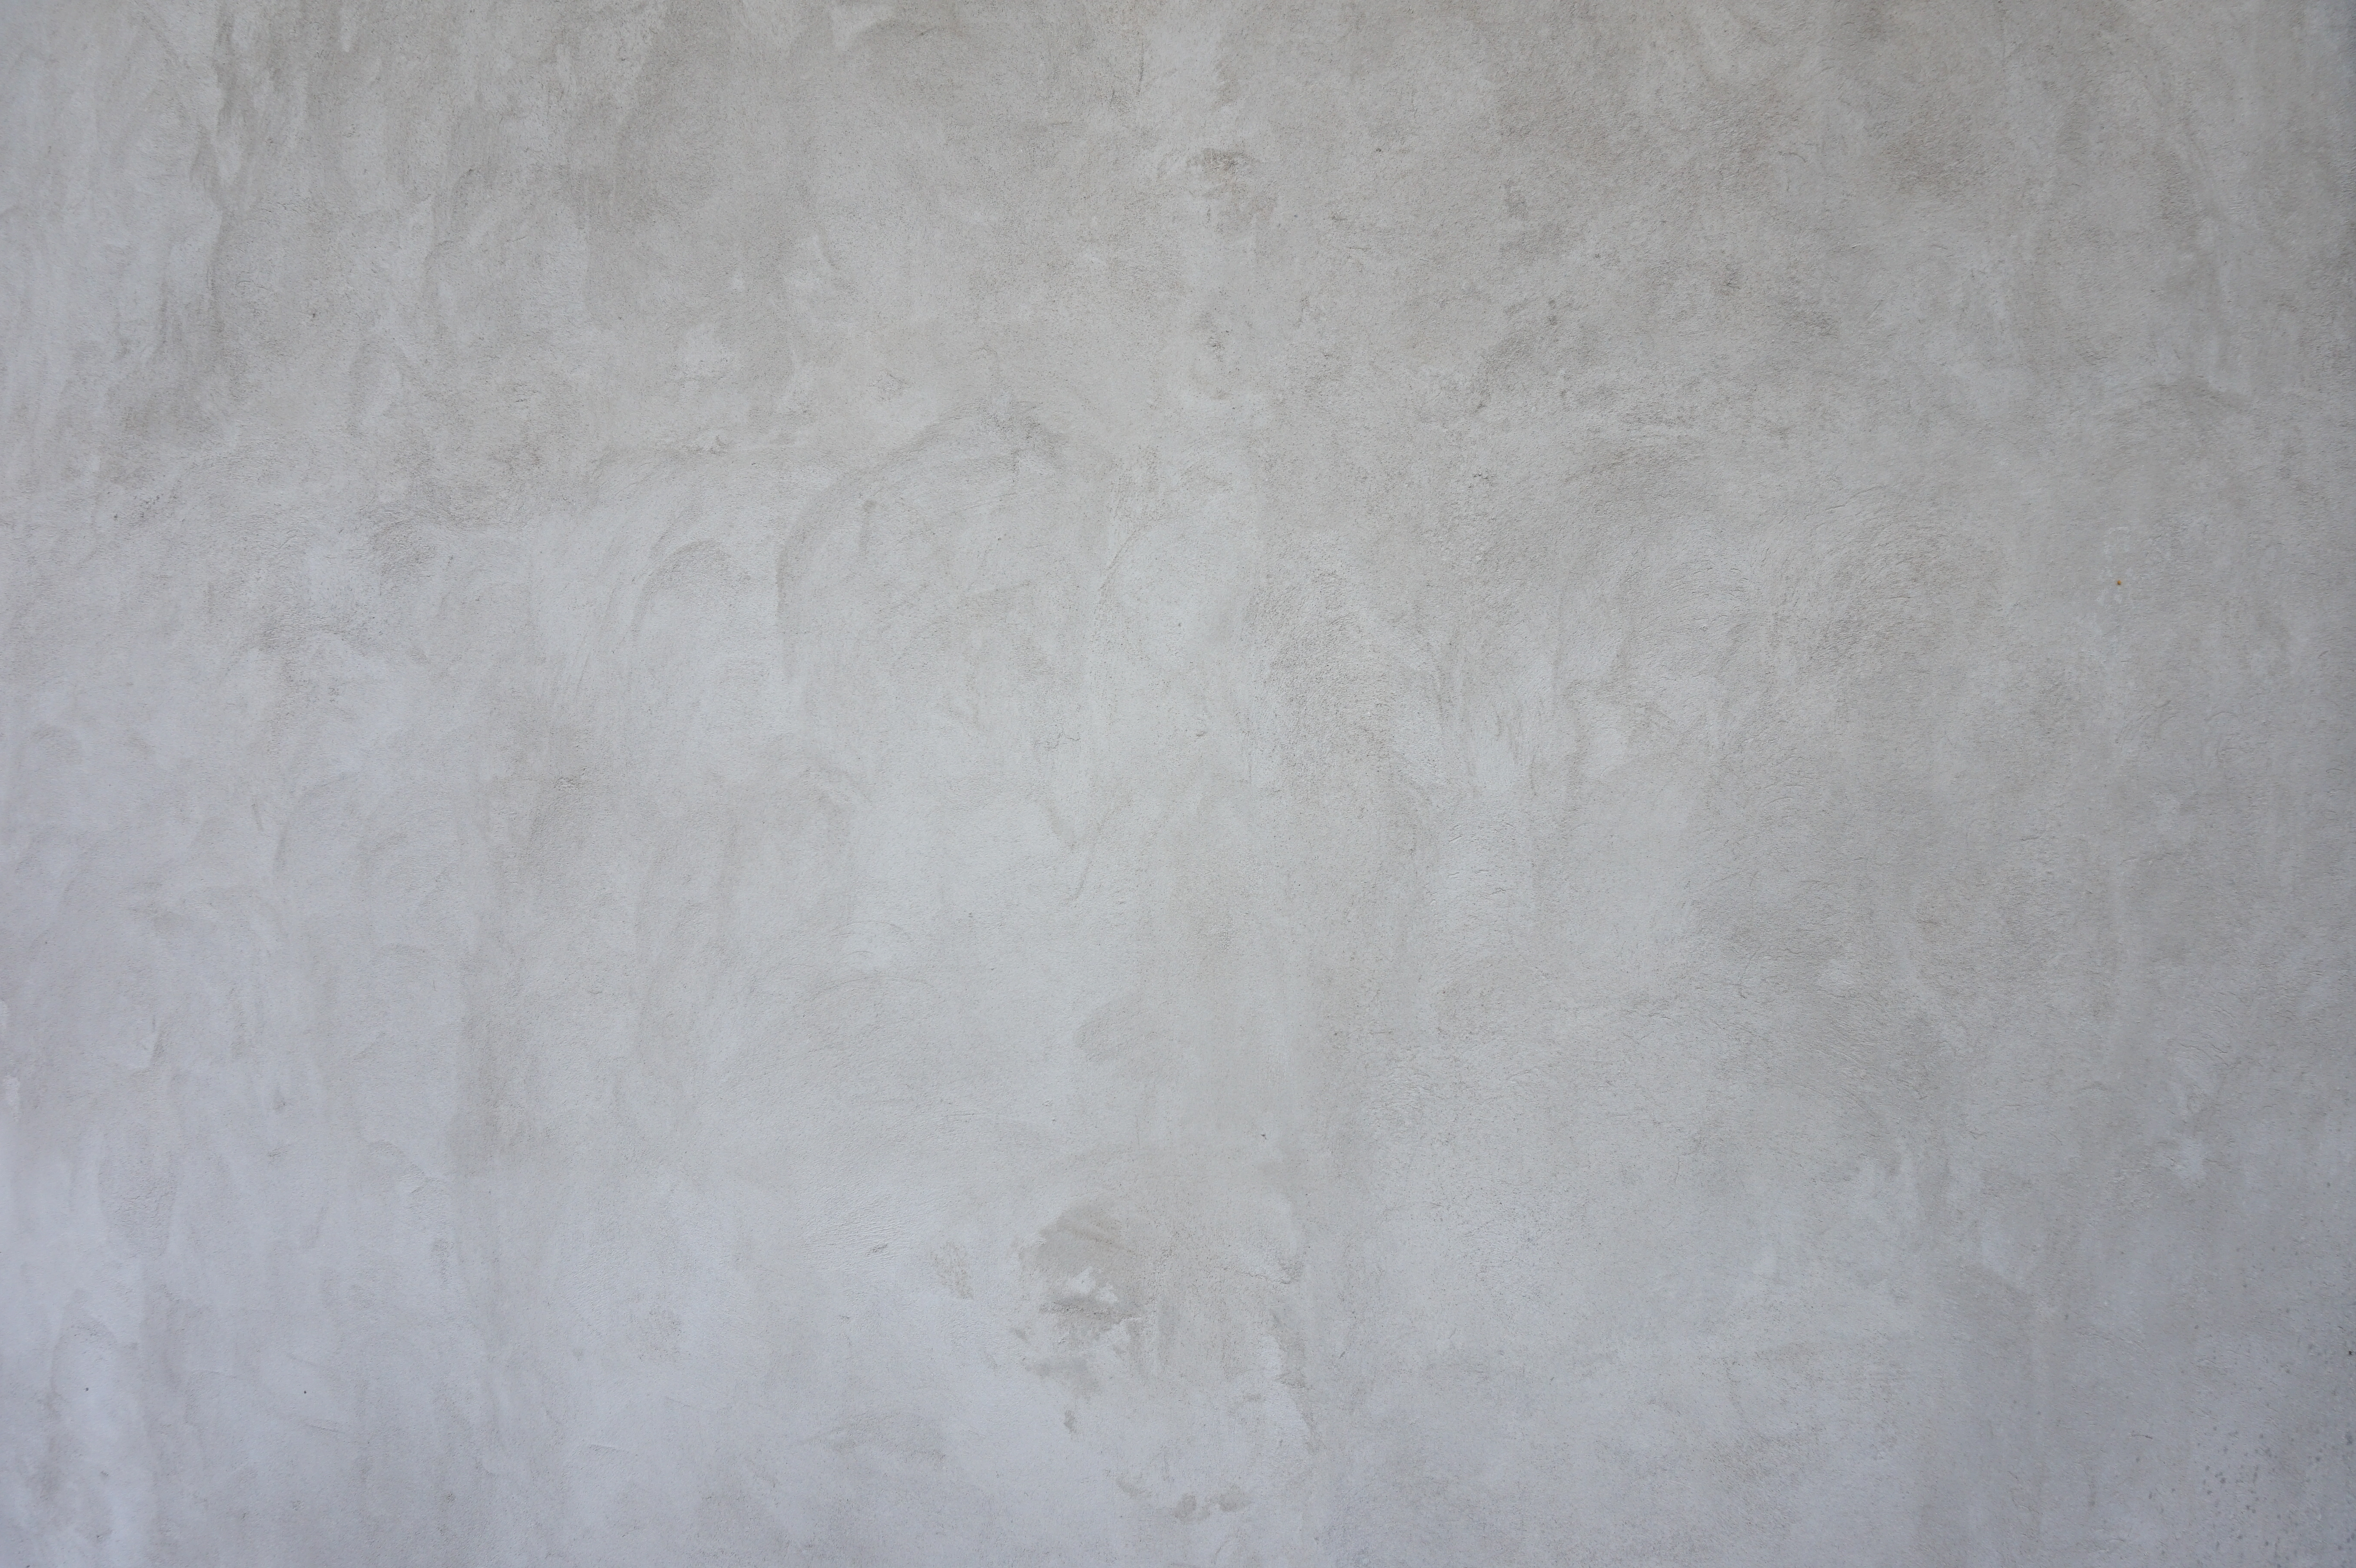 Plain grey concrete wall - Concrete - Texturify - Free textures